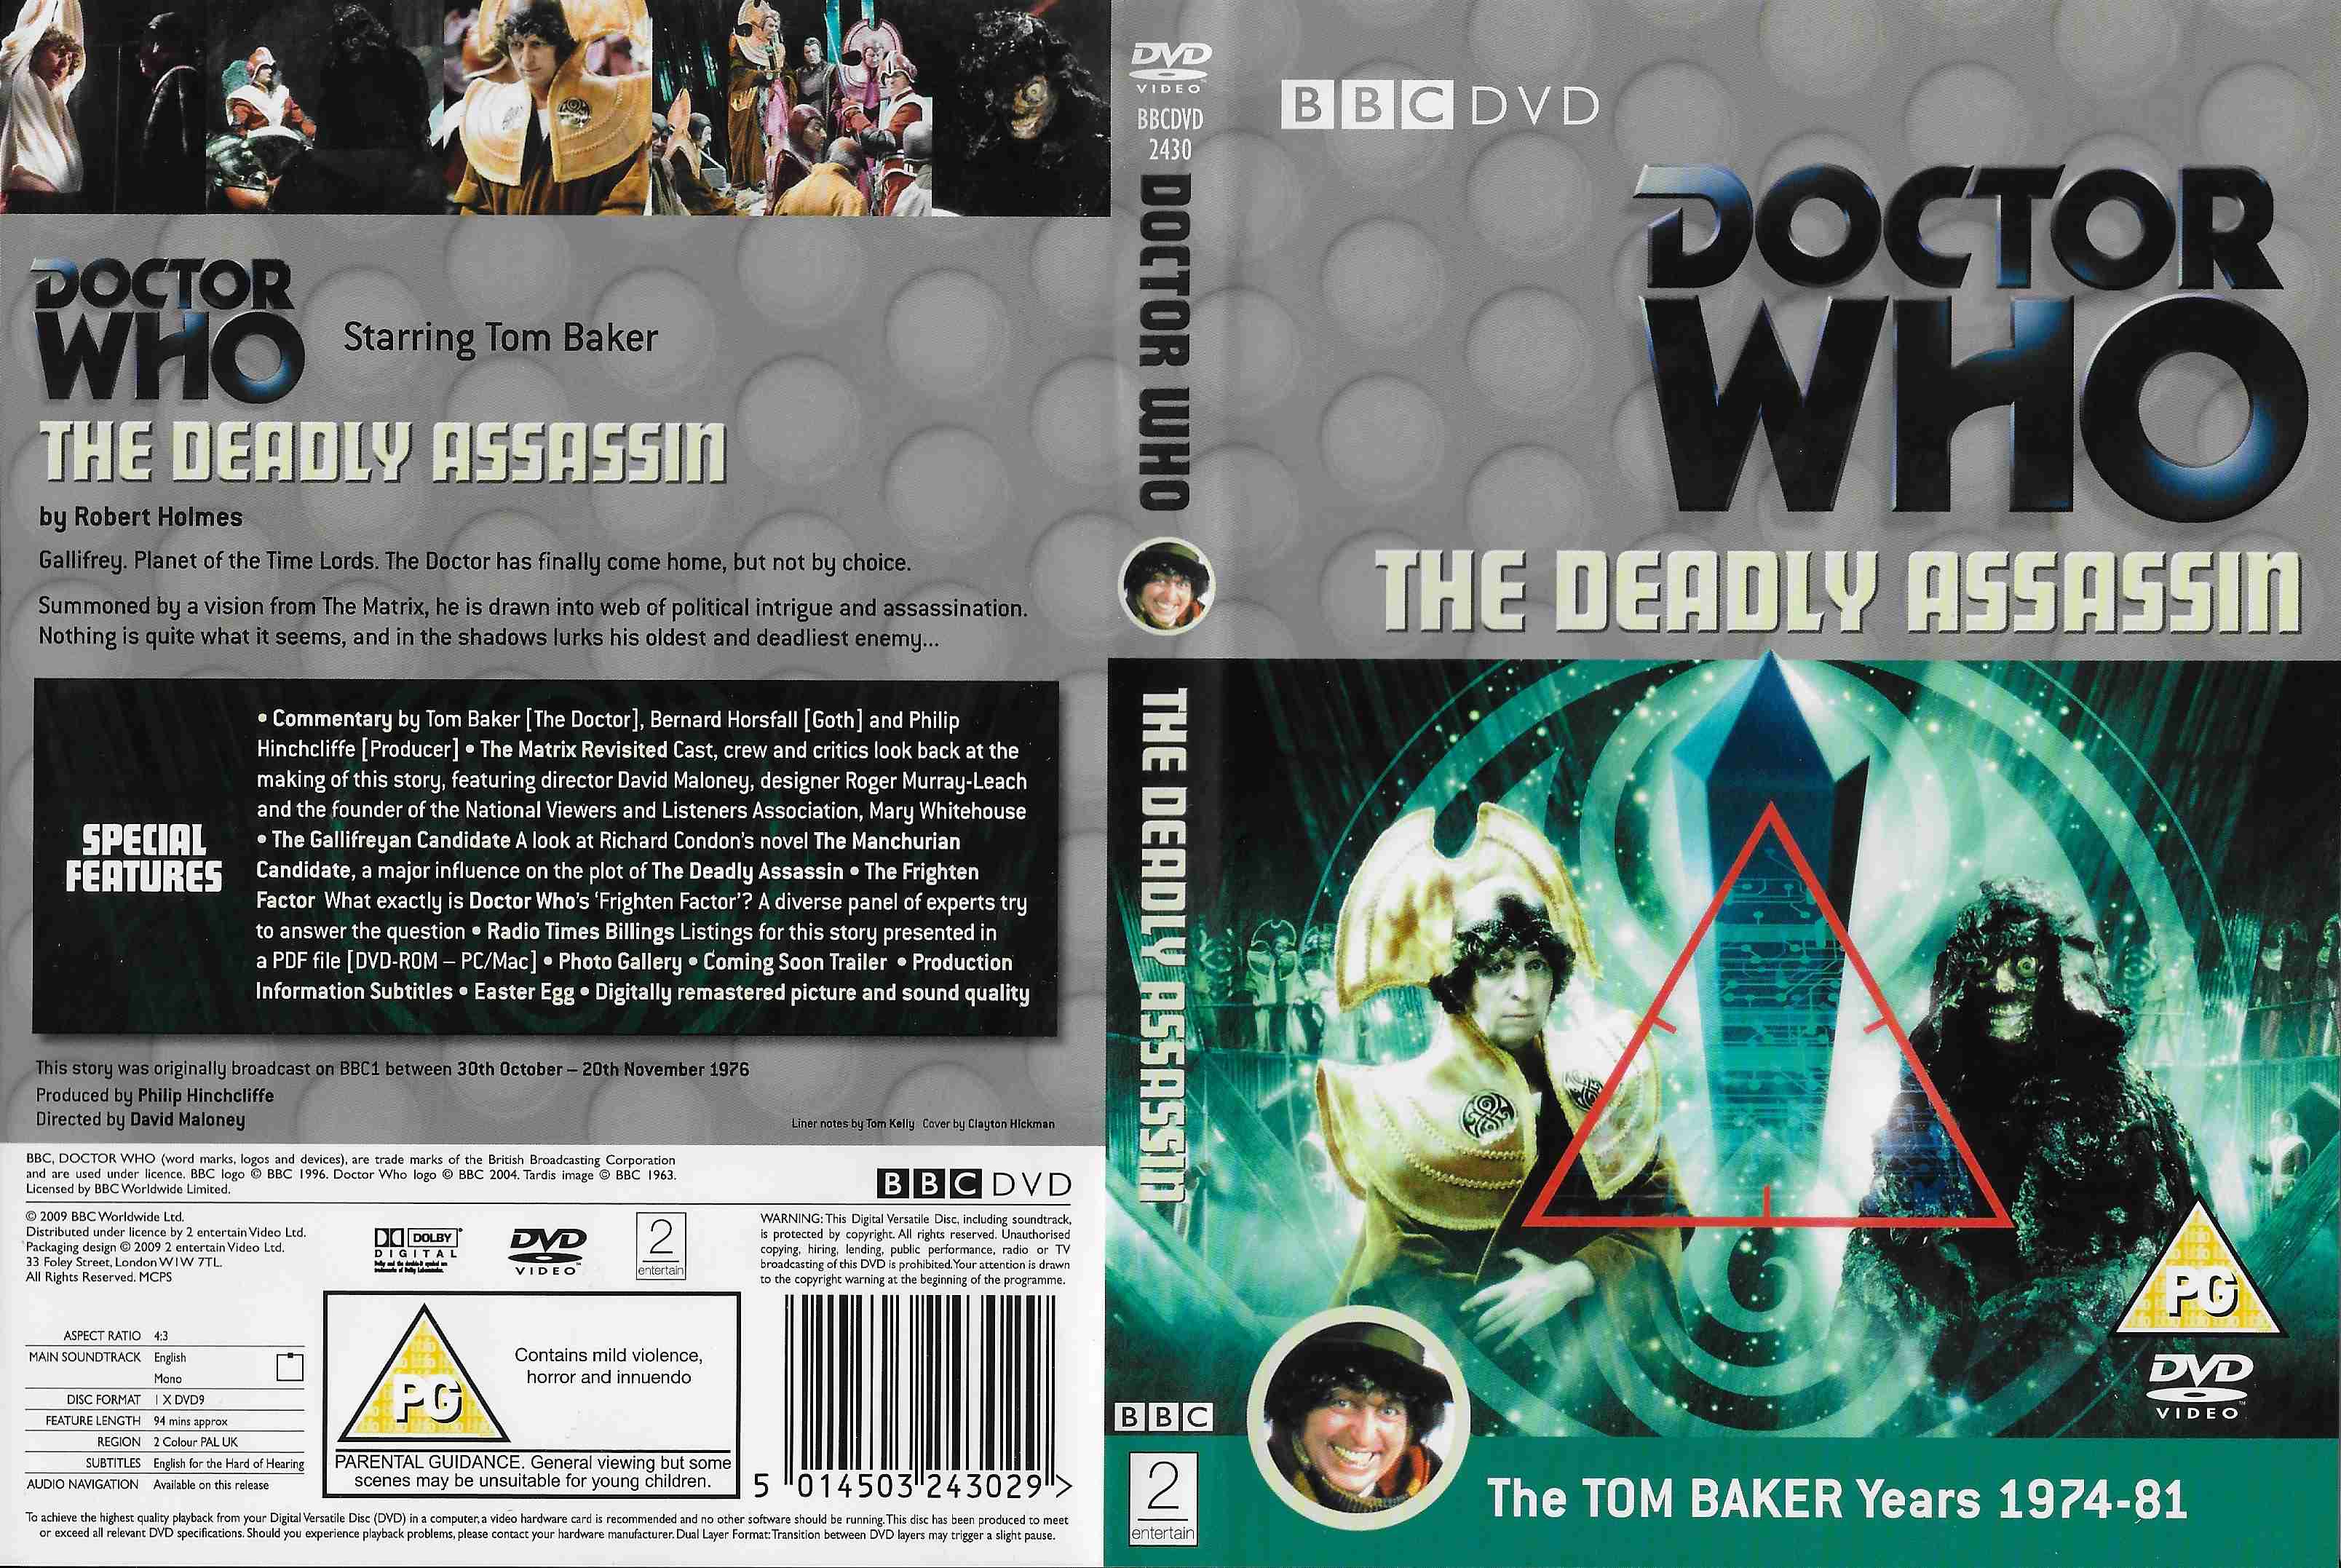 Back cover of BBCDVD 2430